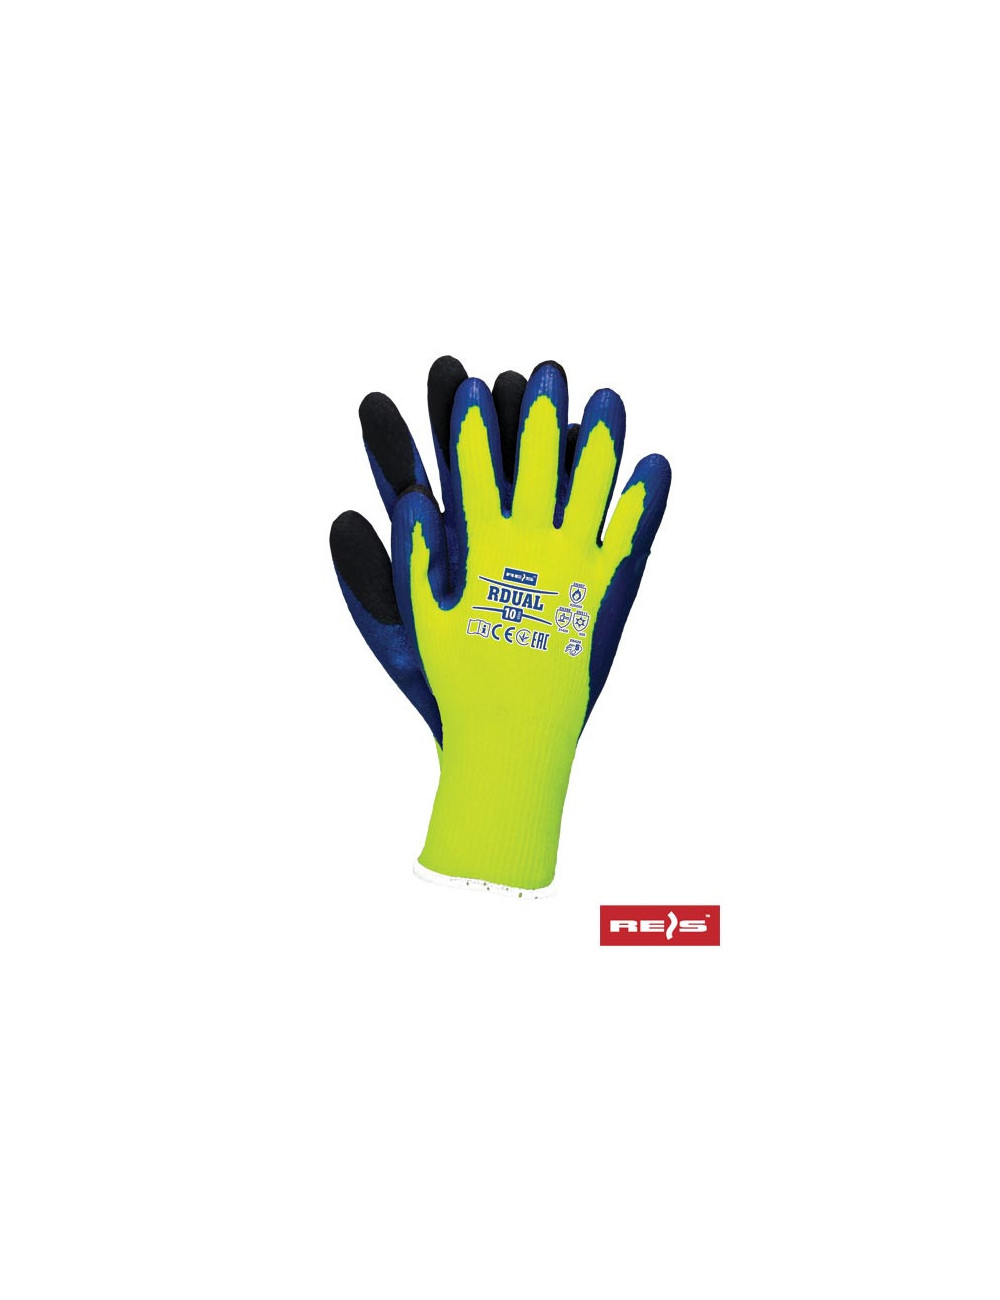 Protective gloves rdual ynb yellow-blue-black Reis